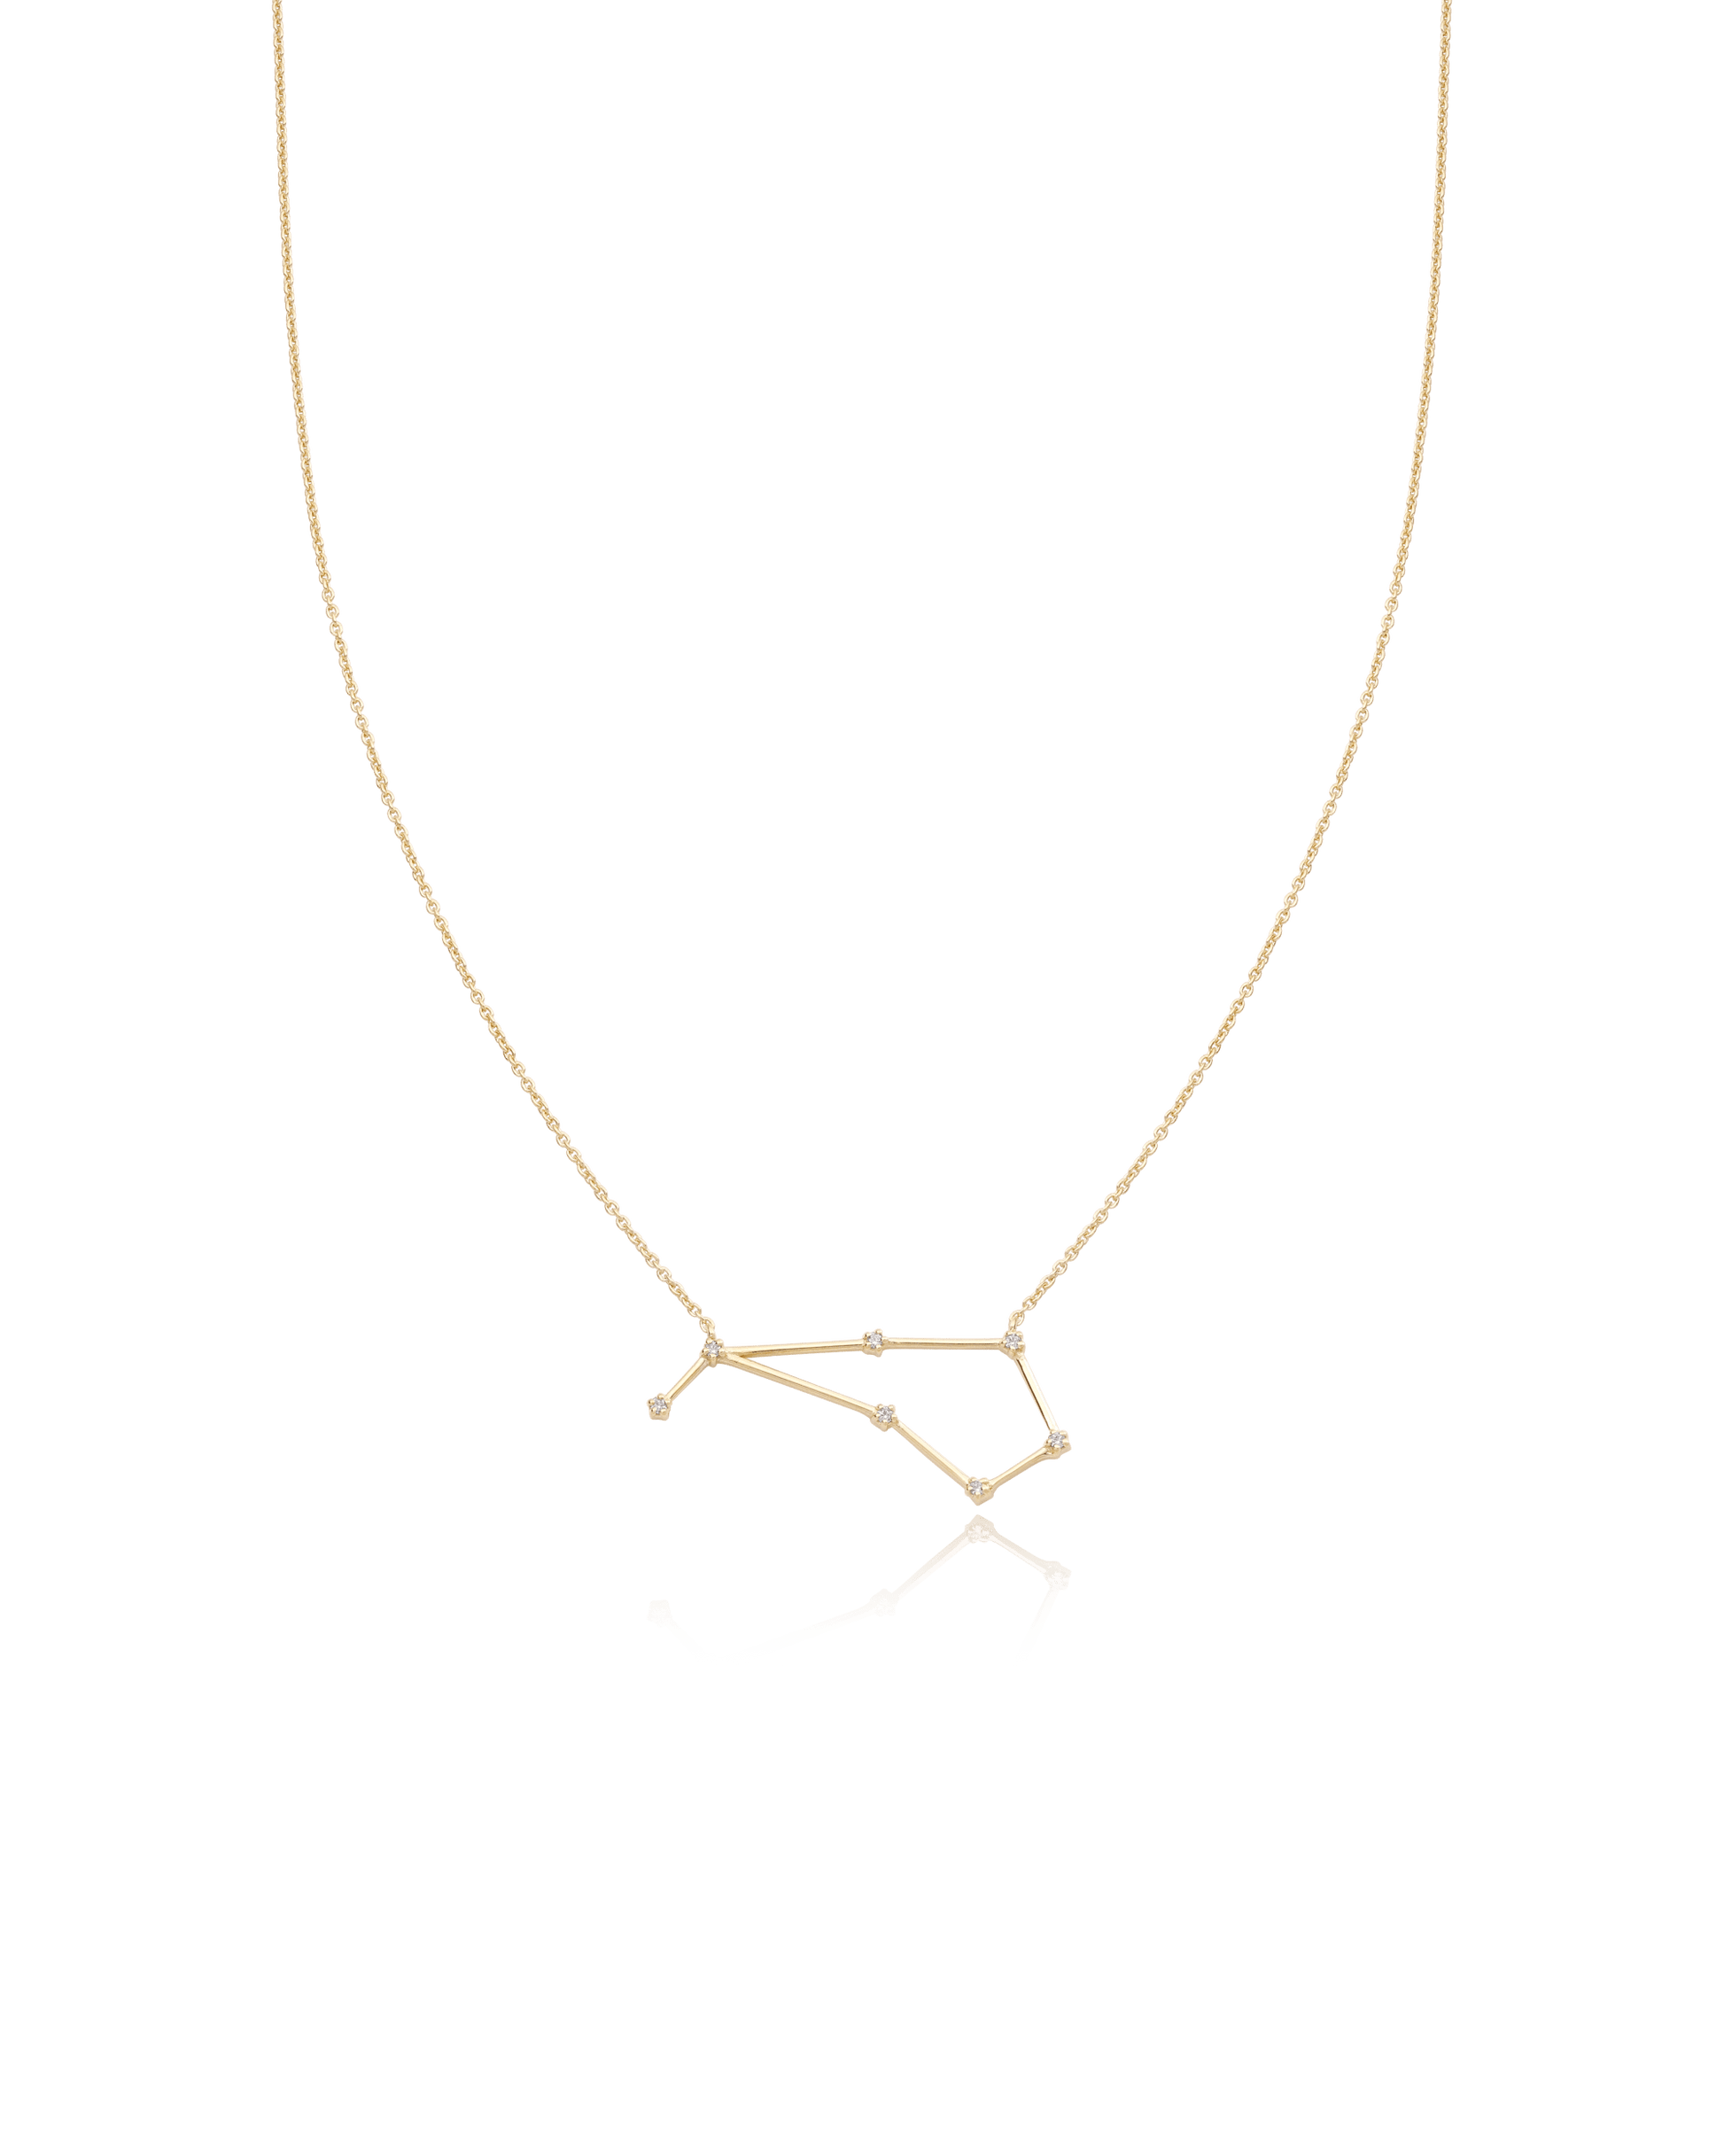 Ursa Major Constellation Necklace - 18K Gold Vermeil Necklaces magal-dev Bootes 16" 